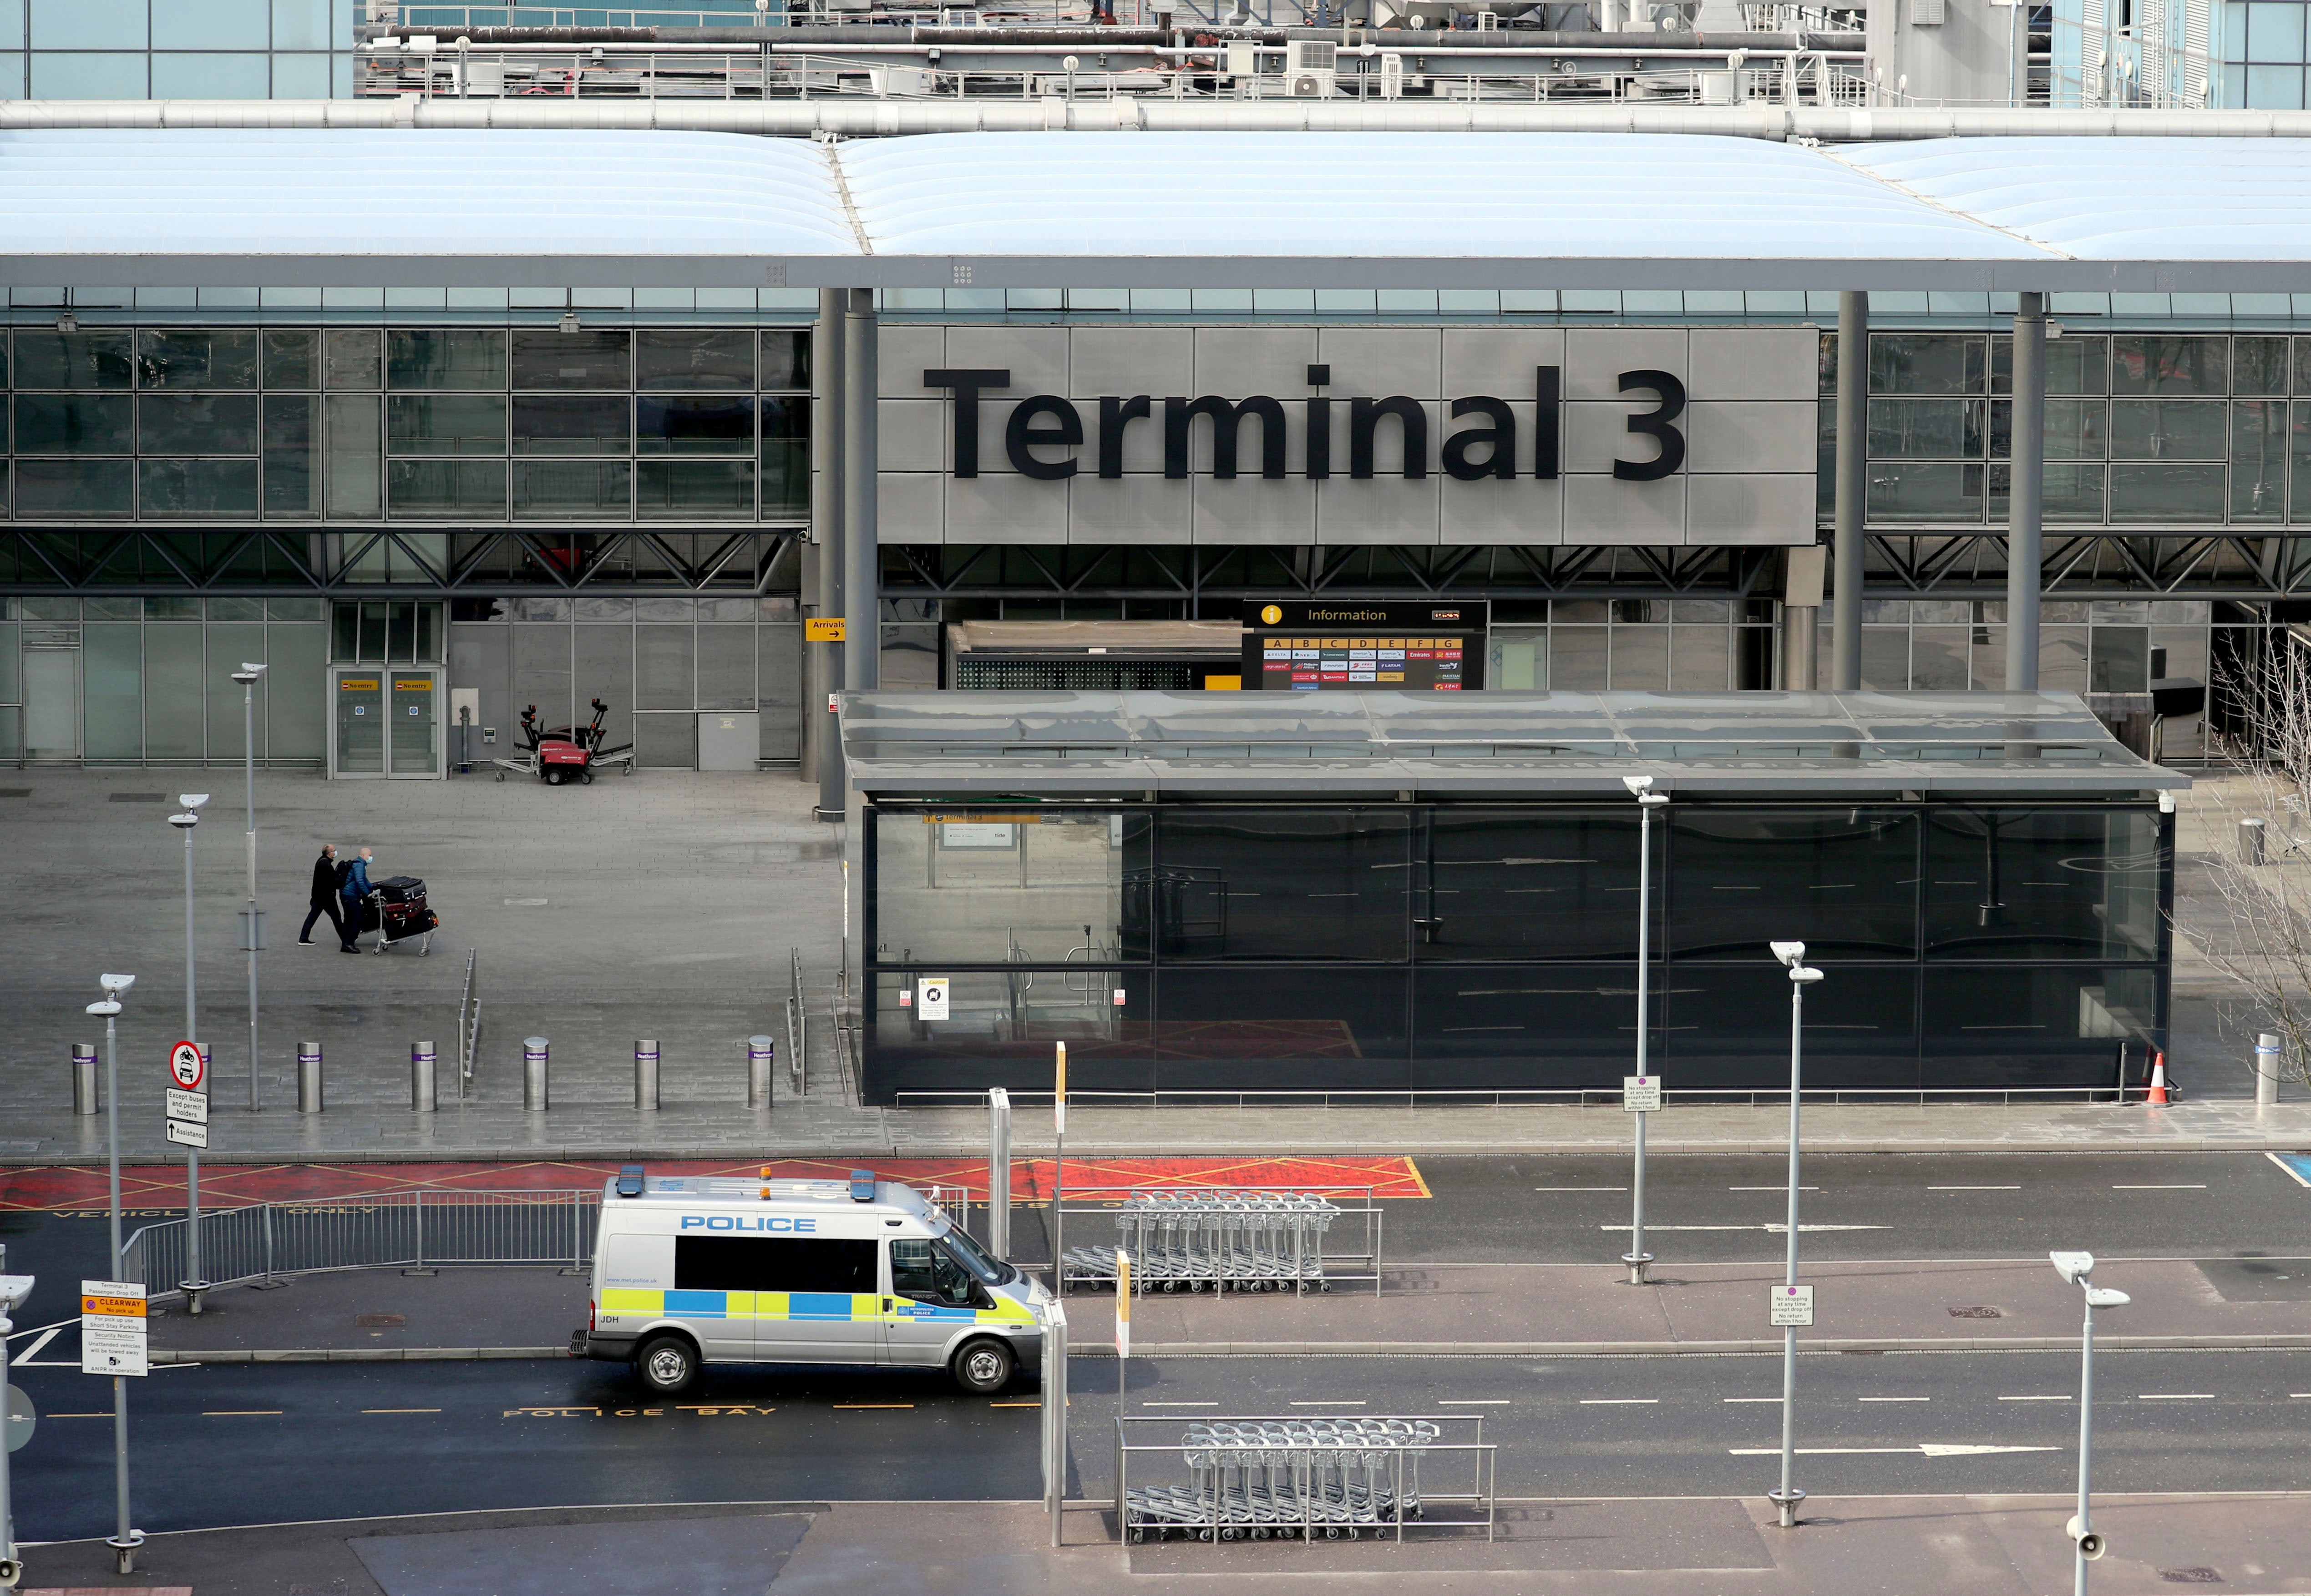 Terminal 3 at Heathrow Airport